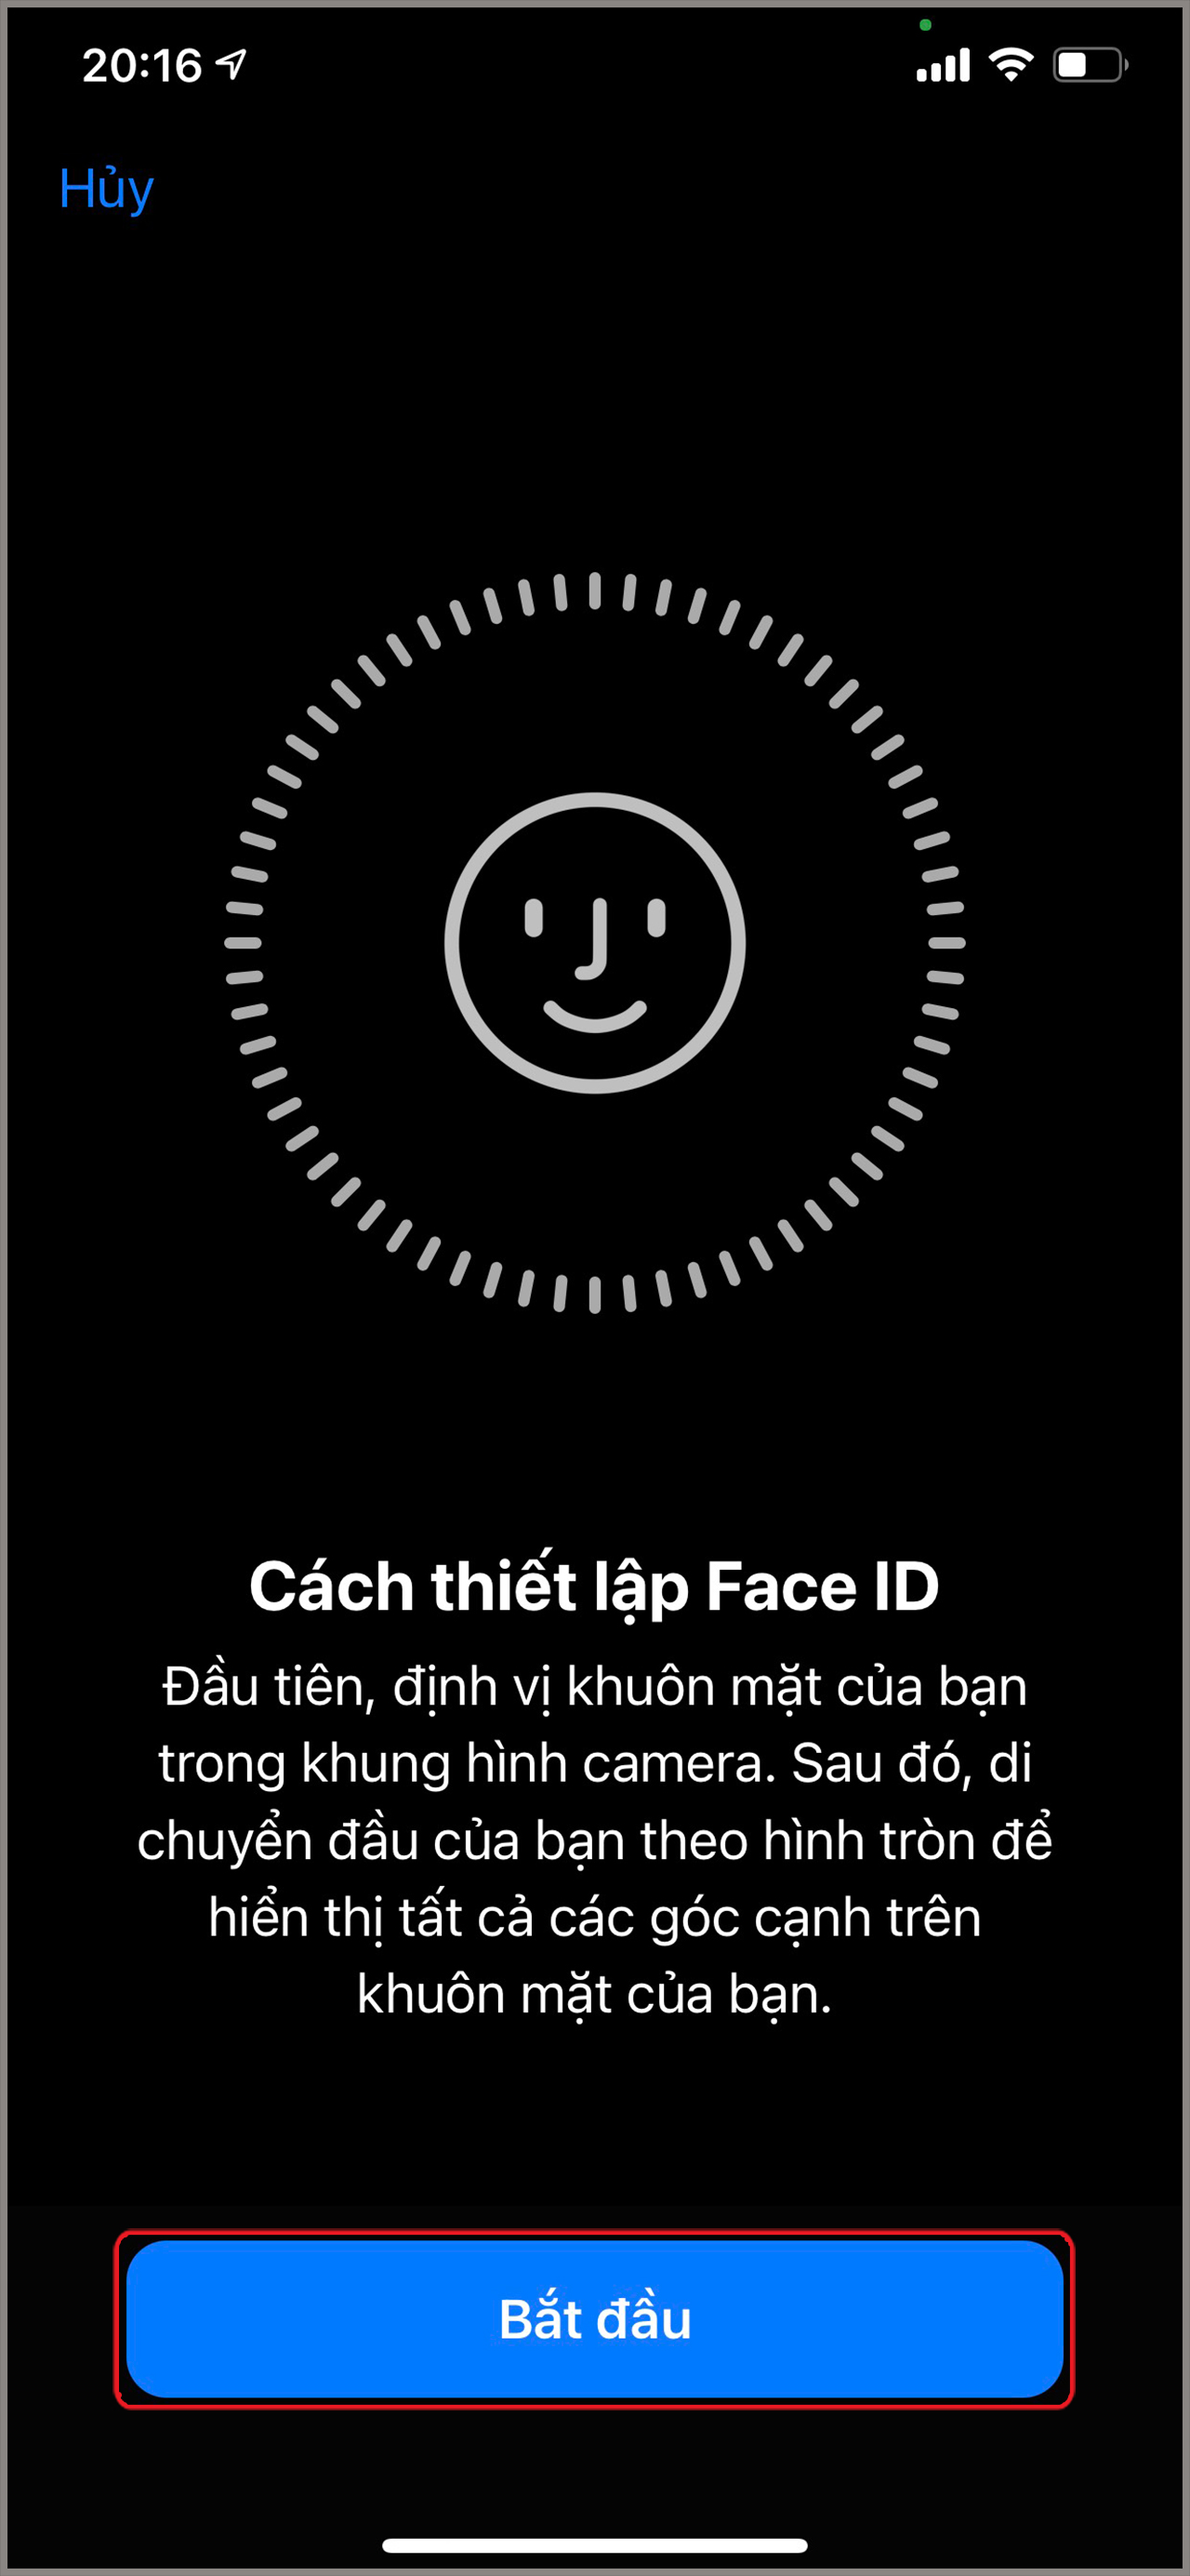 Bảo mật iPhone bằng Face ID